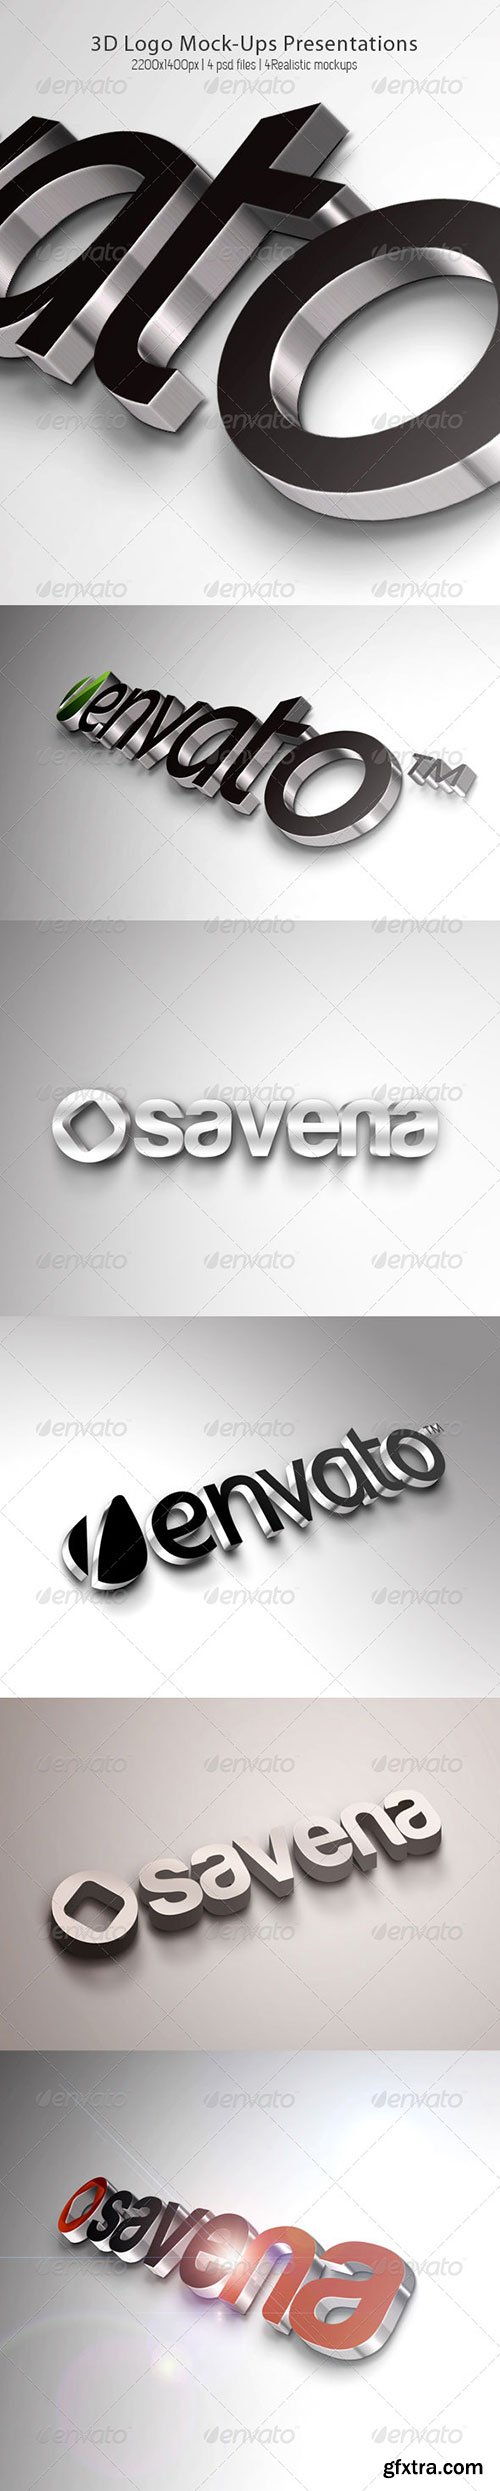 GraphicRiver - 3D Logo Mock-Ups Presentations 4577738